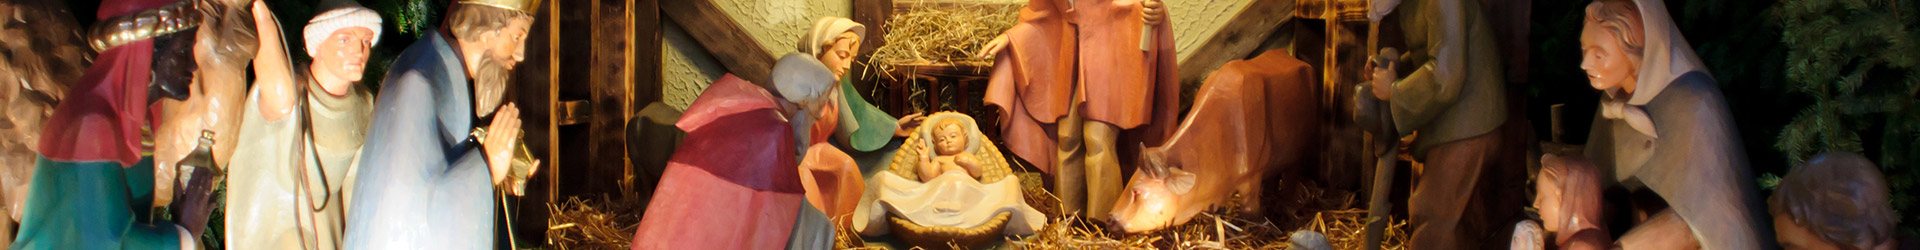 Nativity Cribs, Sets & Figures